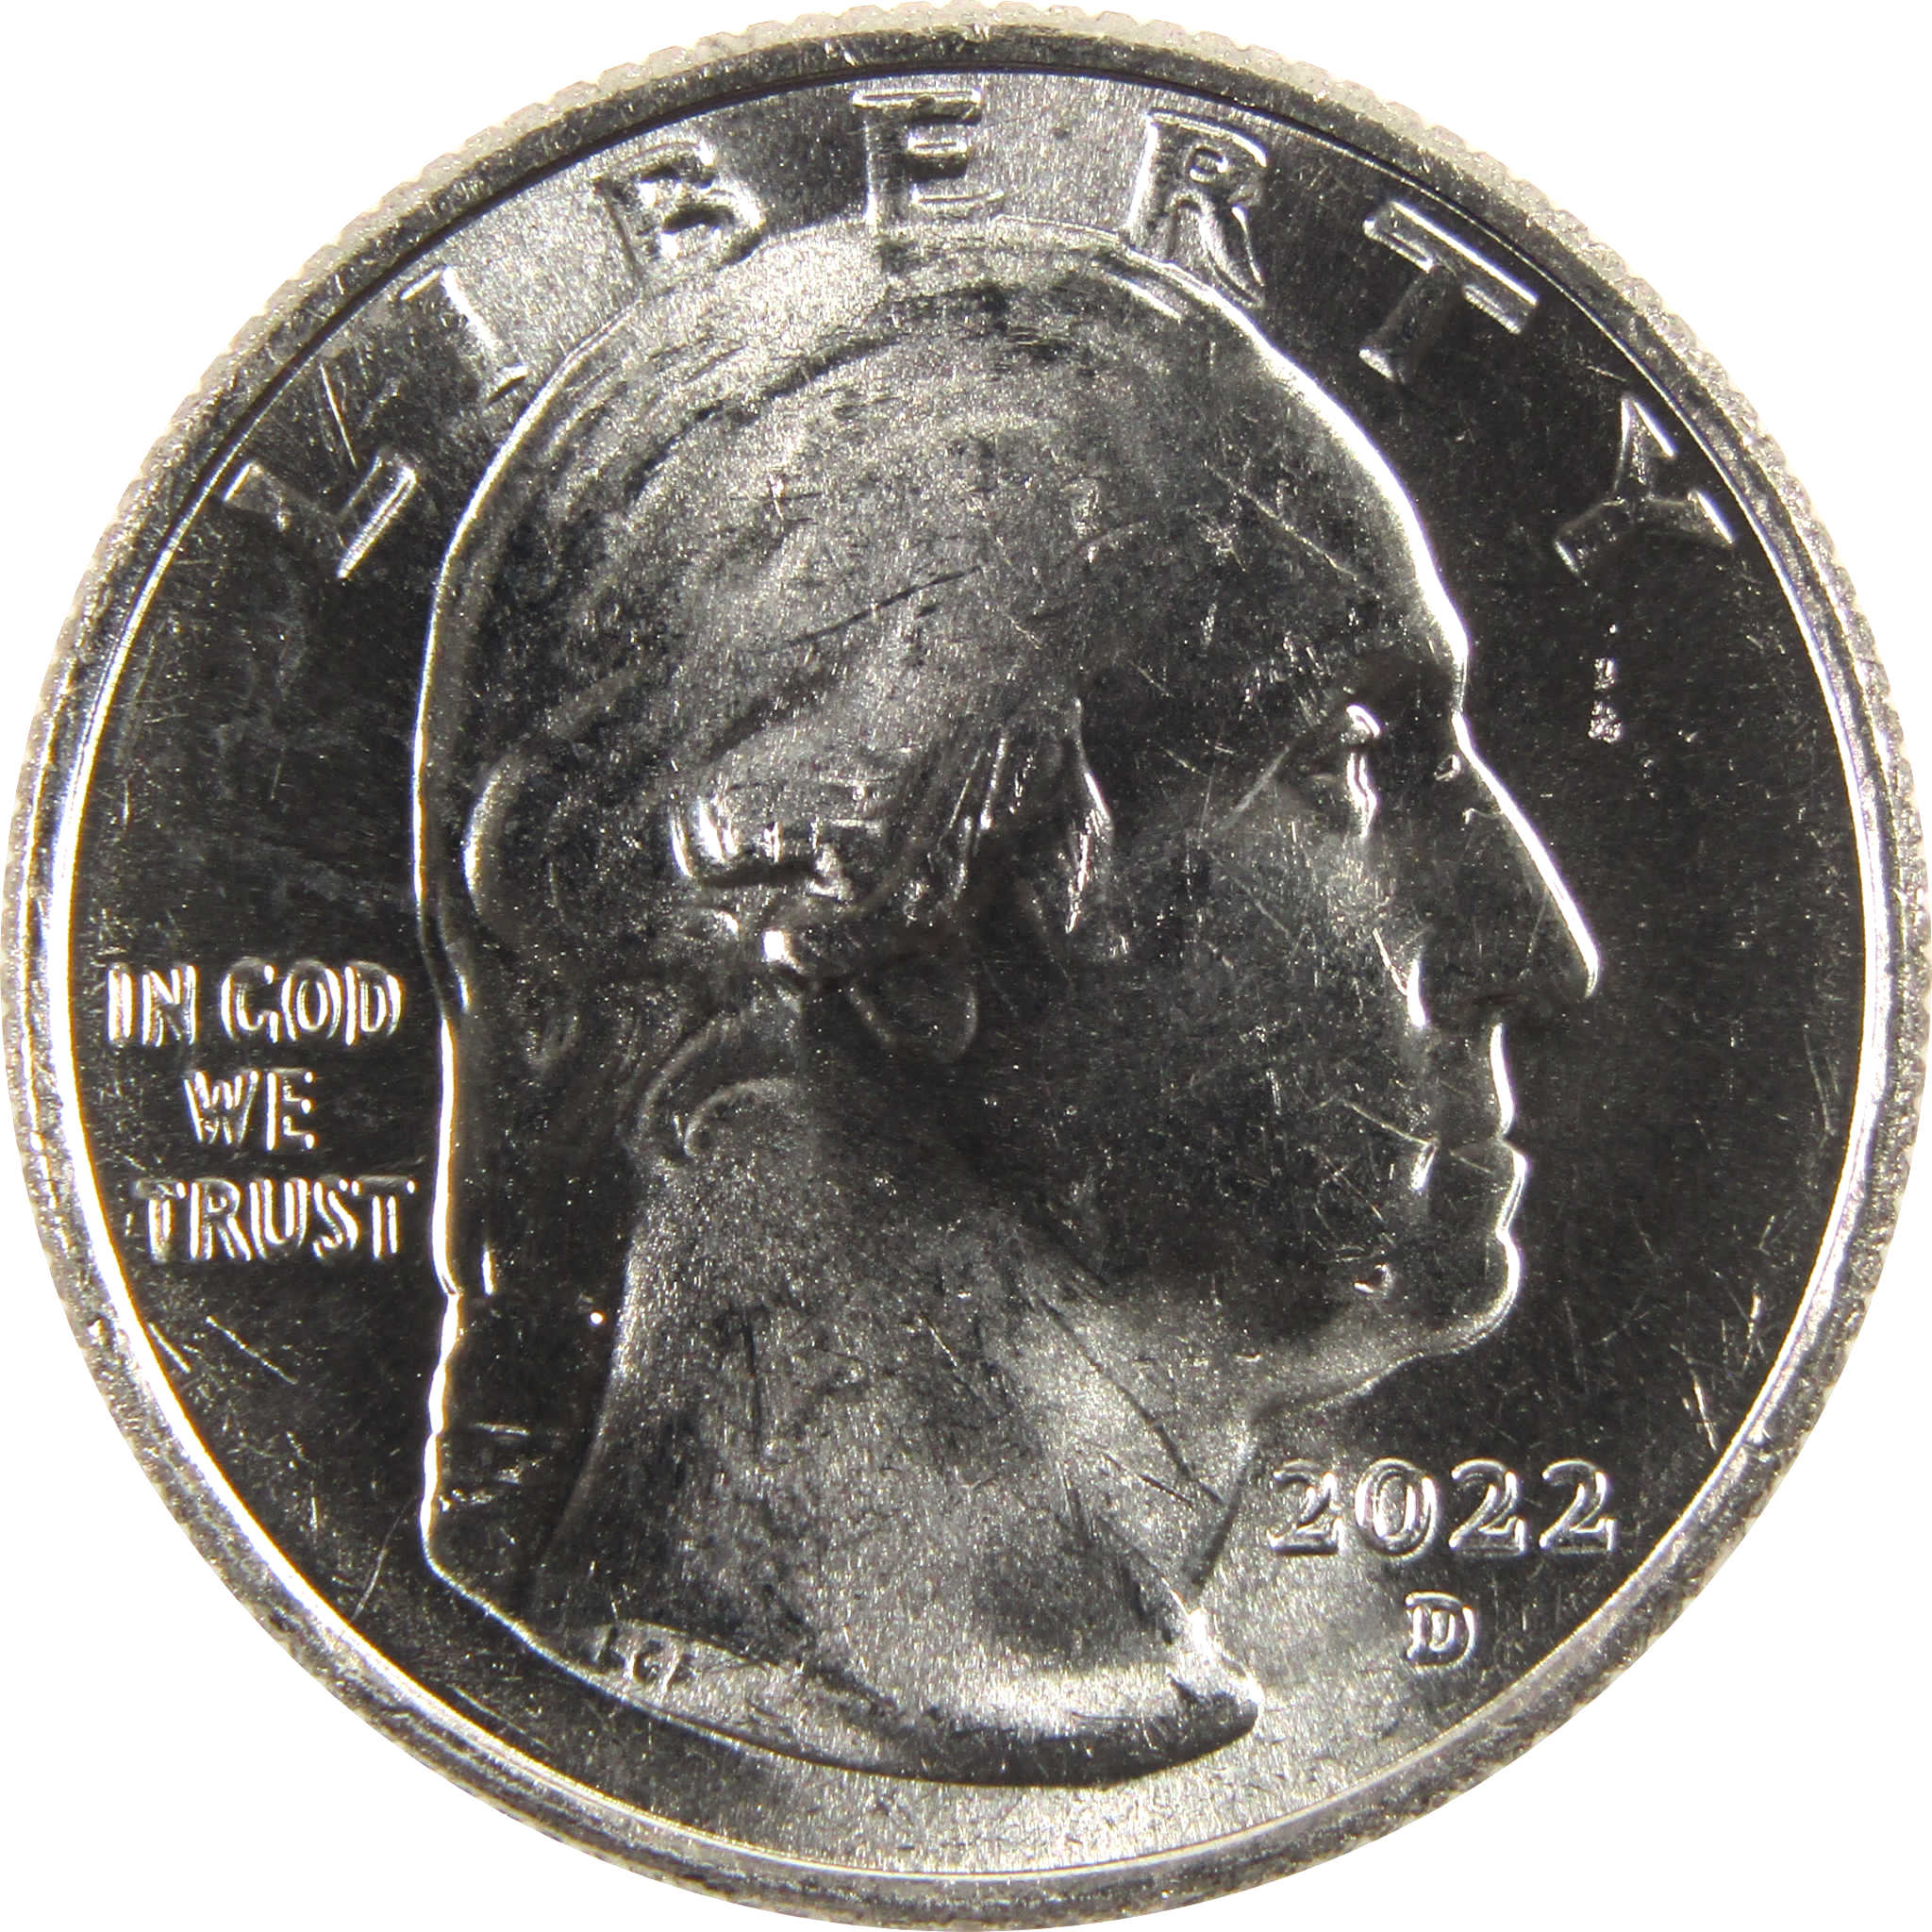 2022 D Anna May Wong American Women Quarter BU Uncirculated Clad Coin